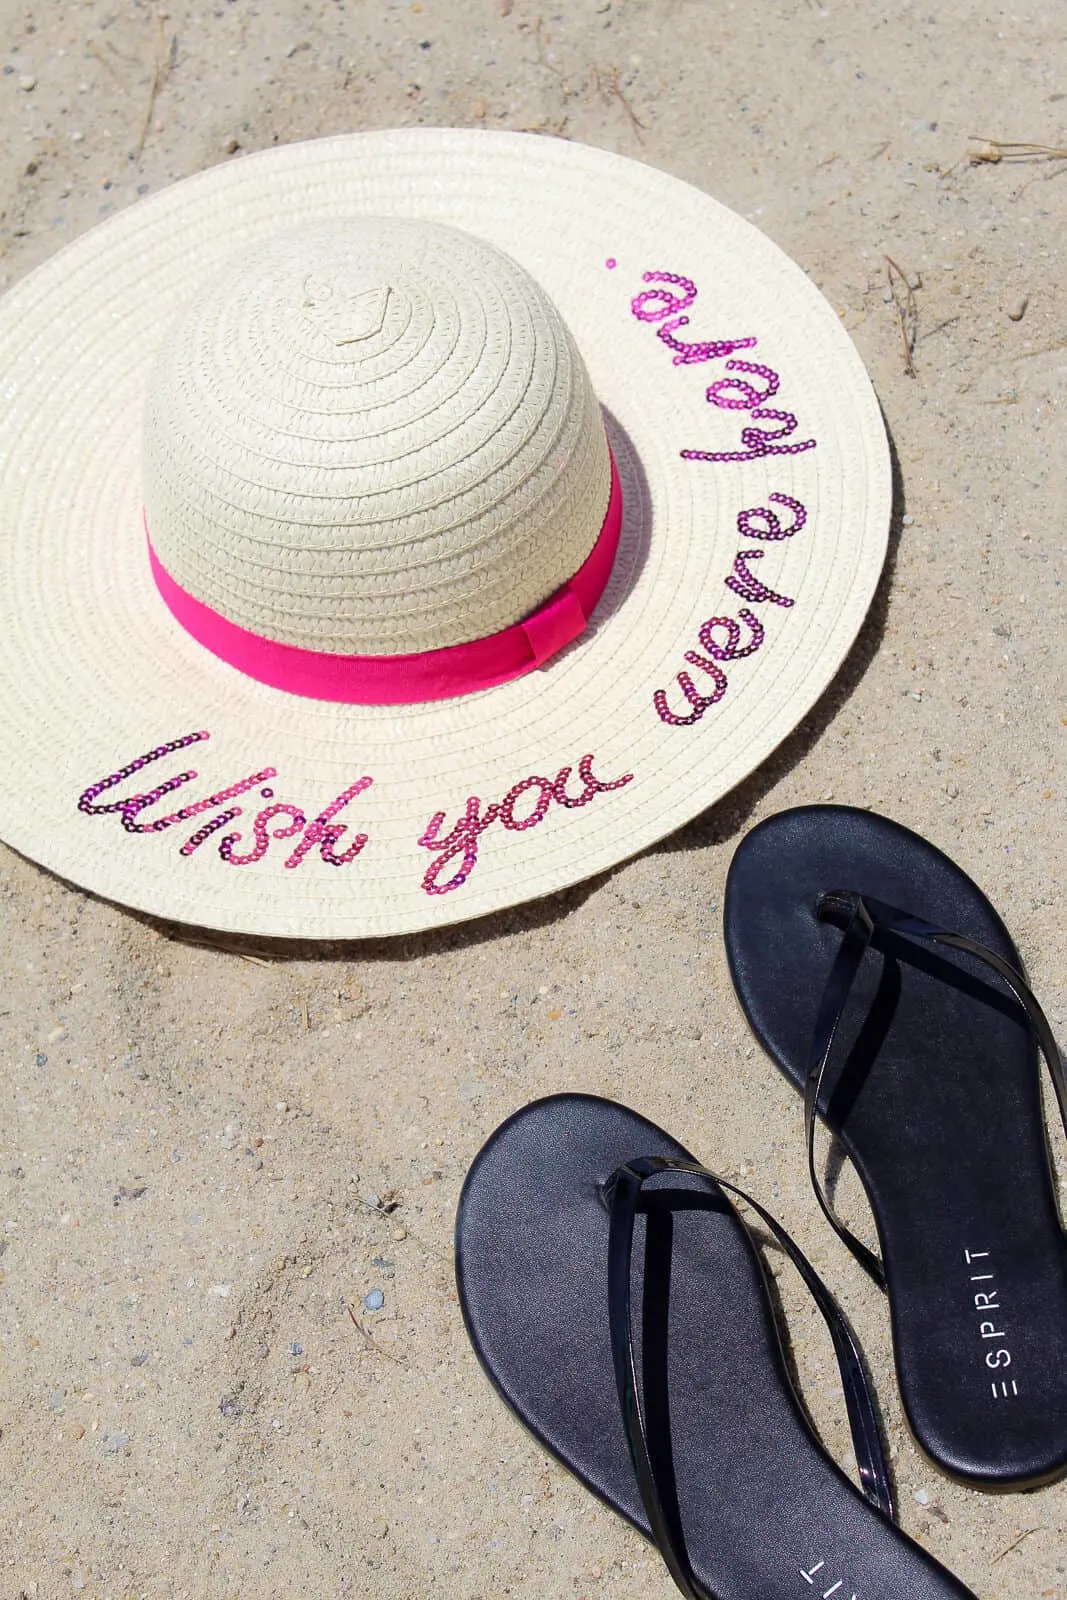 Wish you were here summer hat lays on beach next to black flip flops.